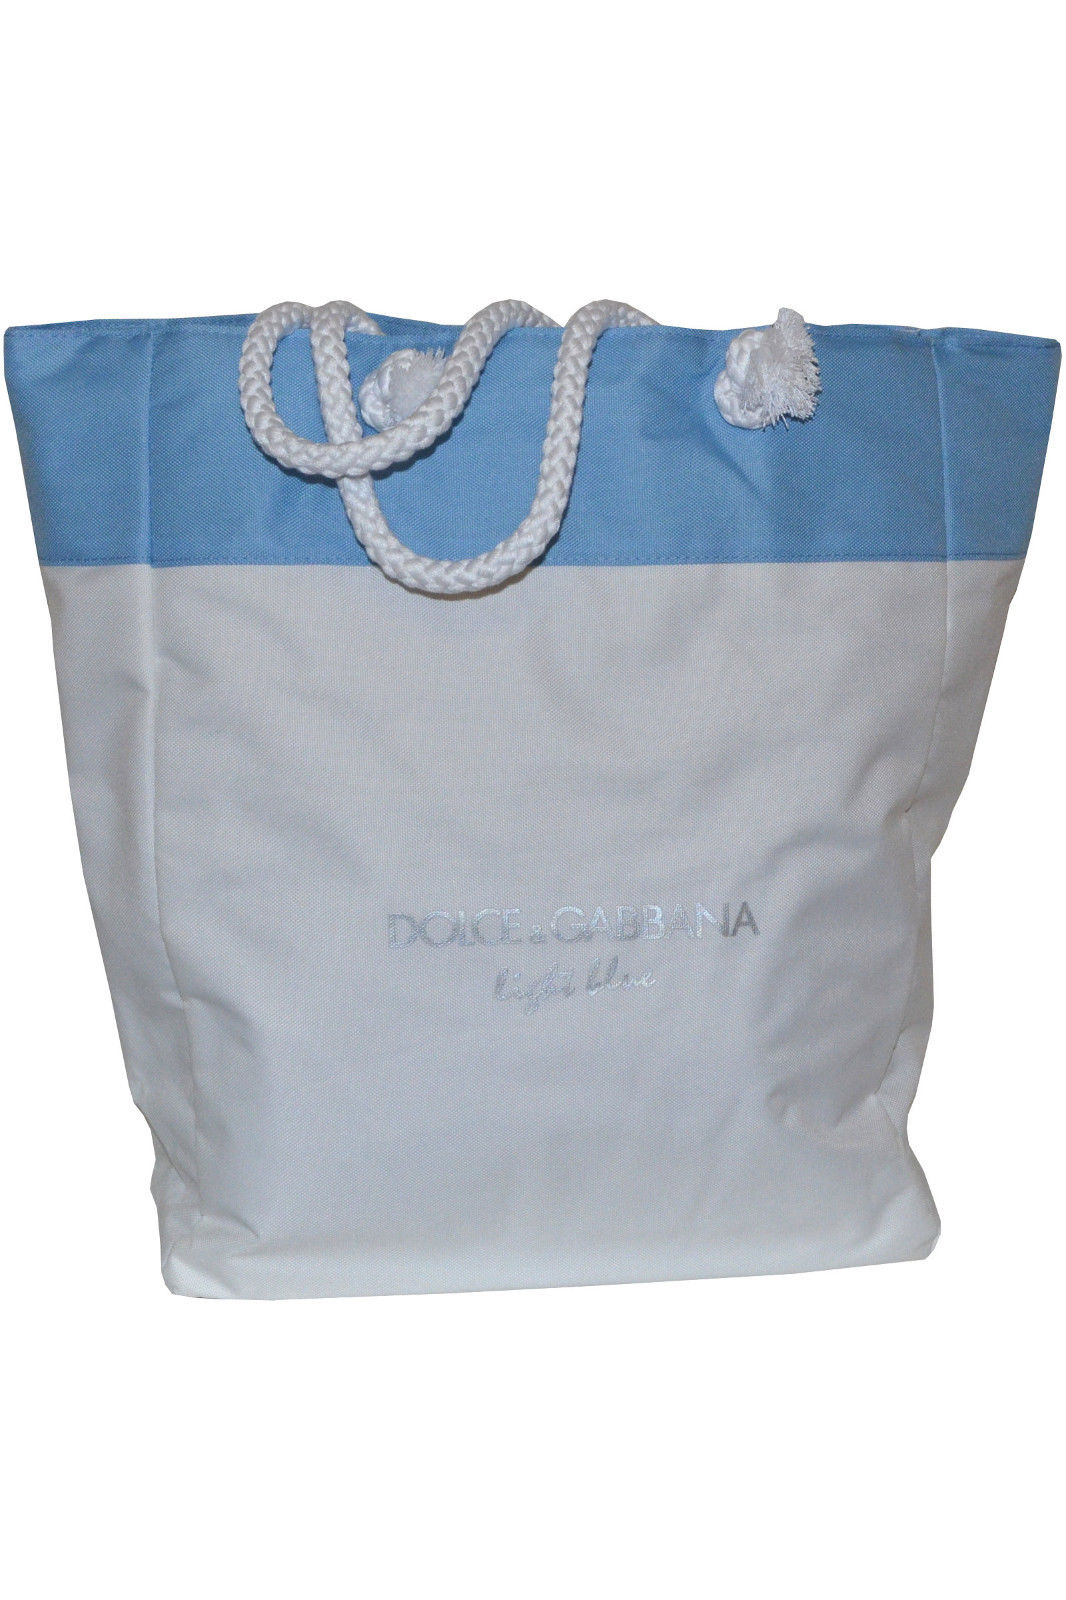 dolce and gabbana tote bag